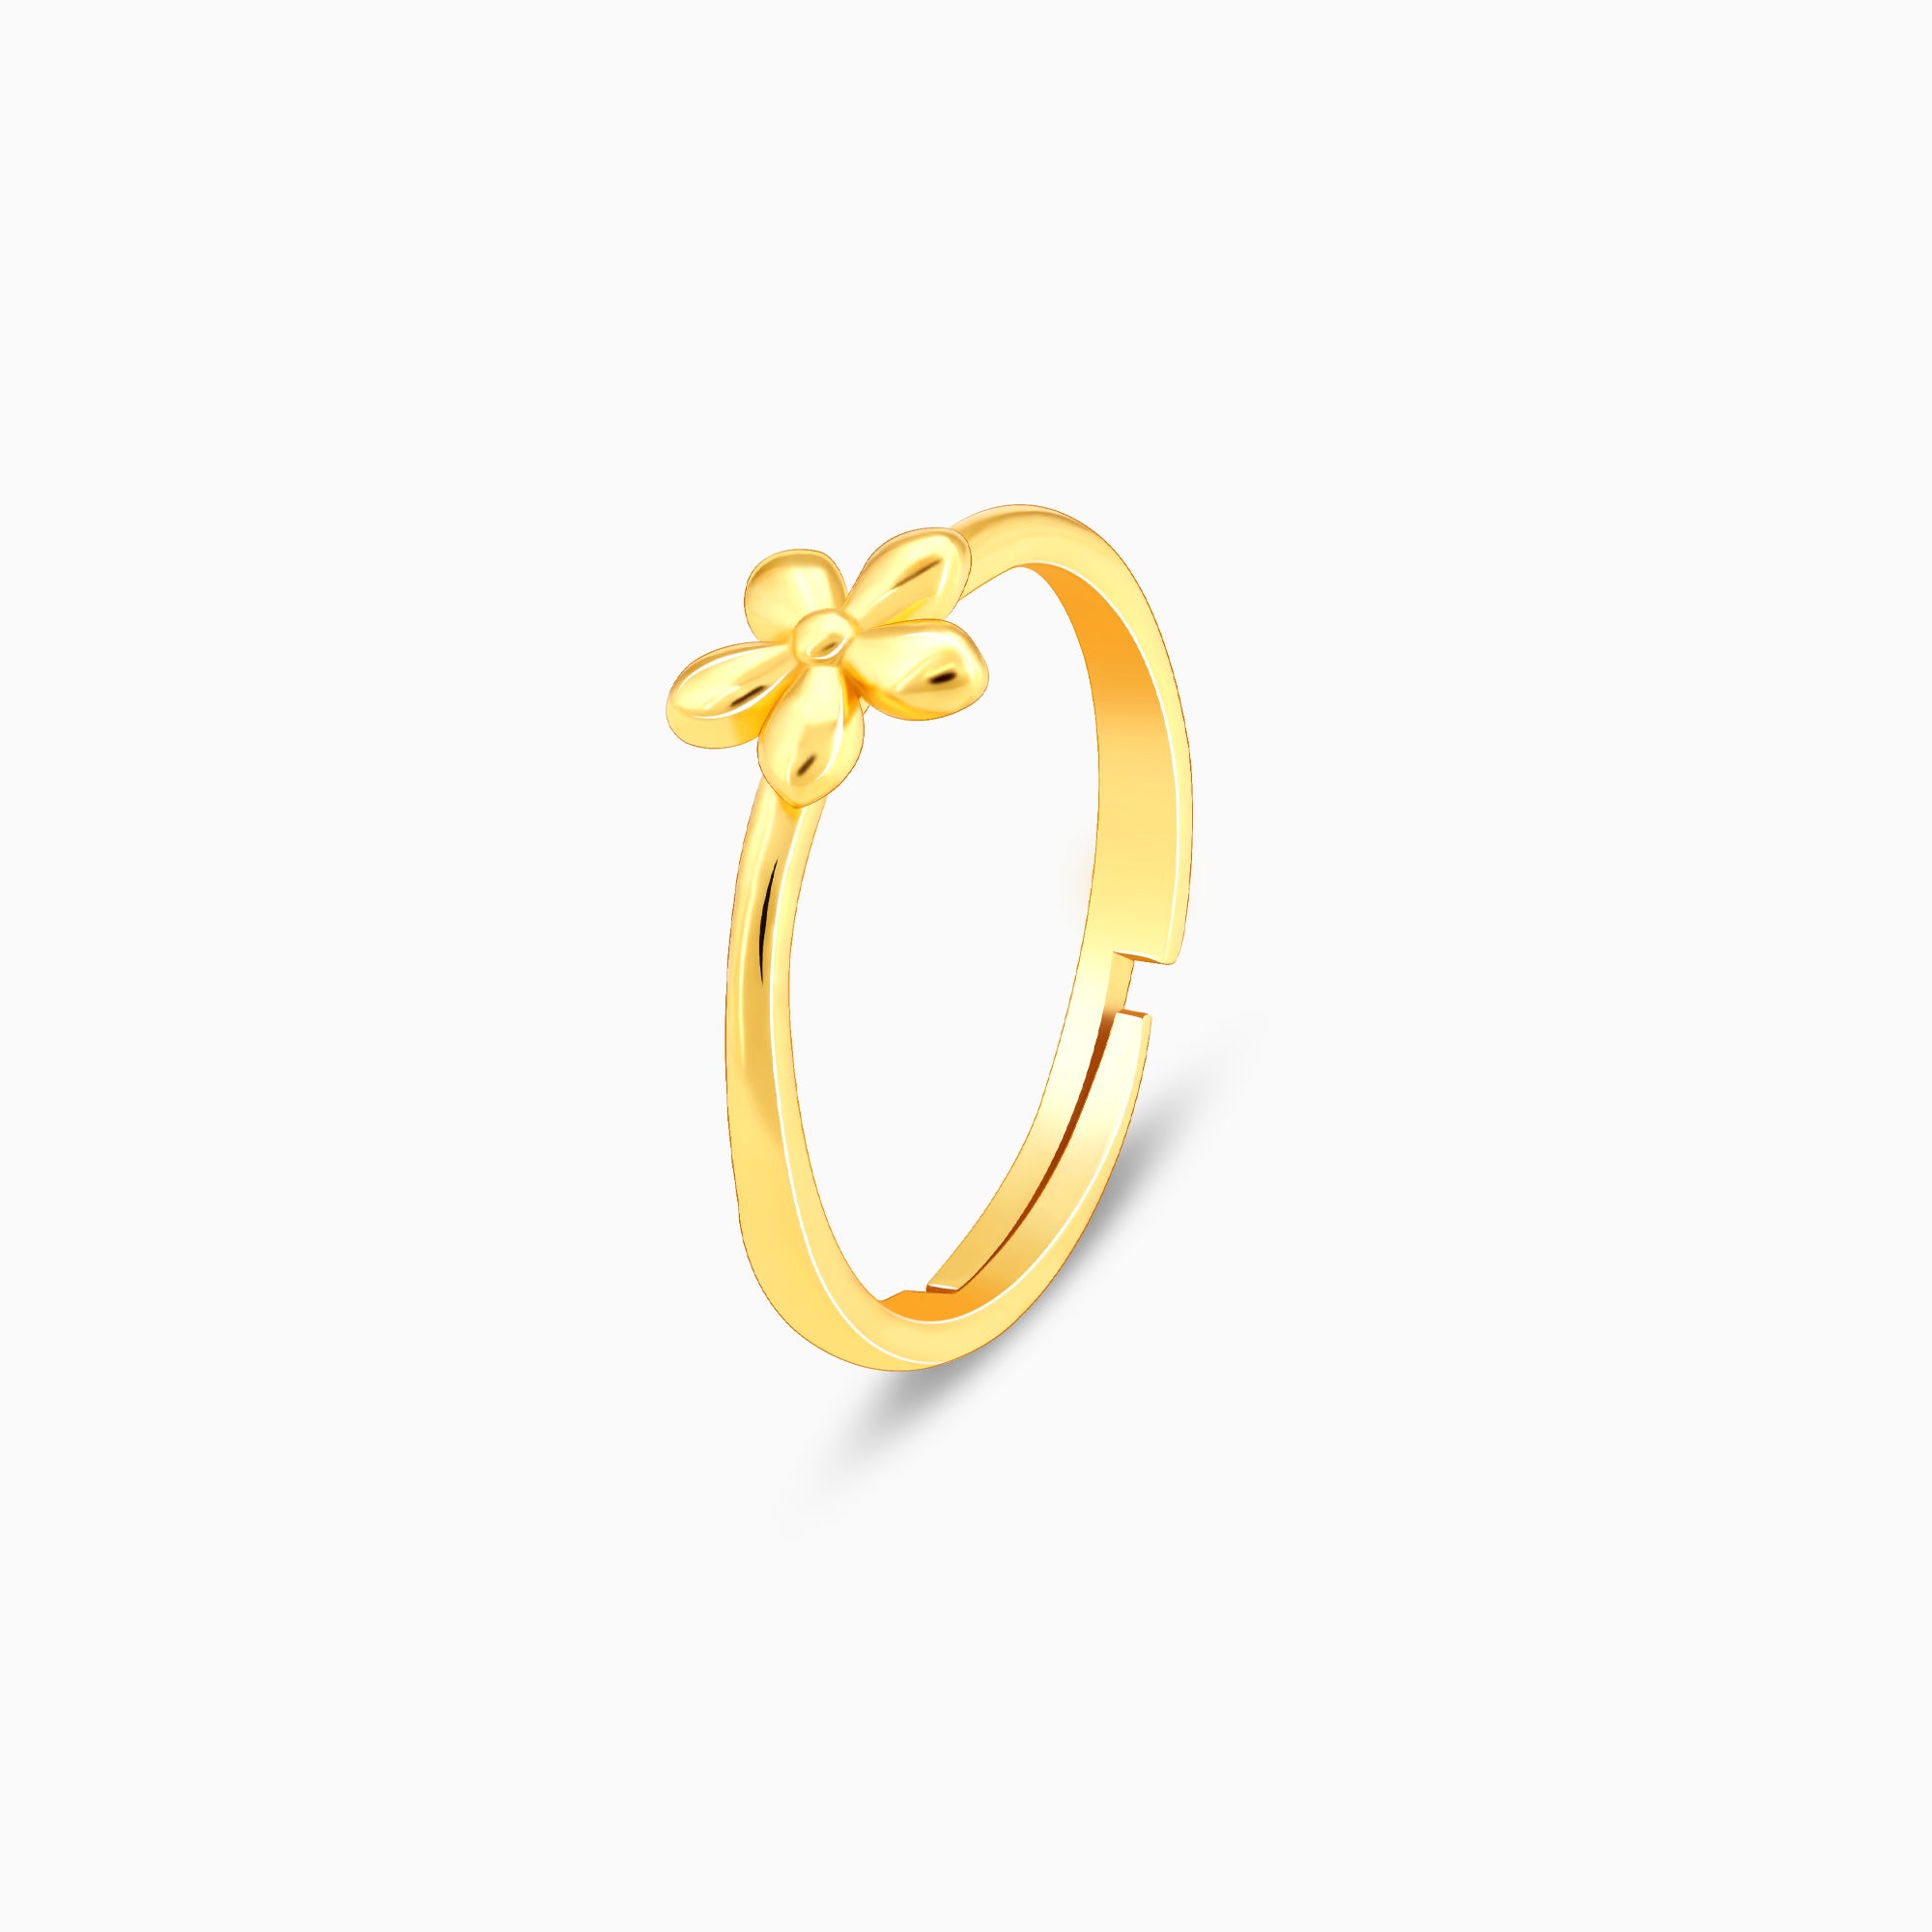 Gold Ring Below 6000 - Buy Gold Ring Below 6000 online at Best Prices in  India | Flipkart.com